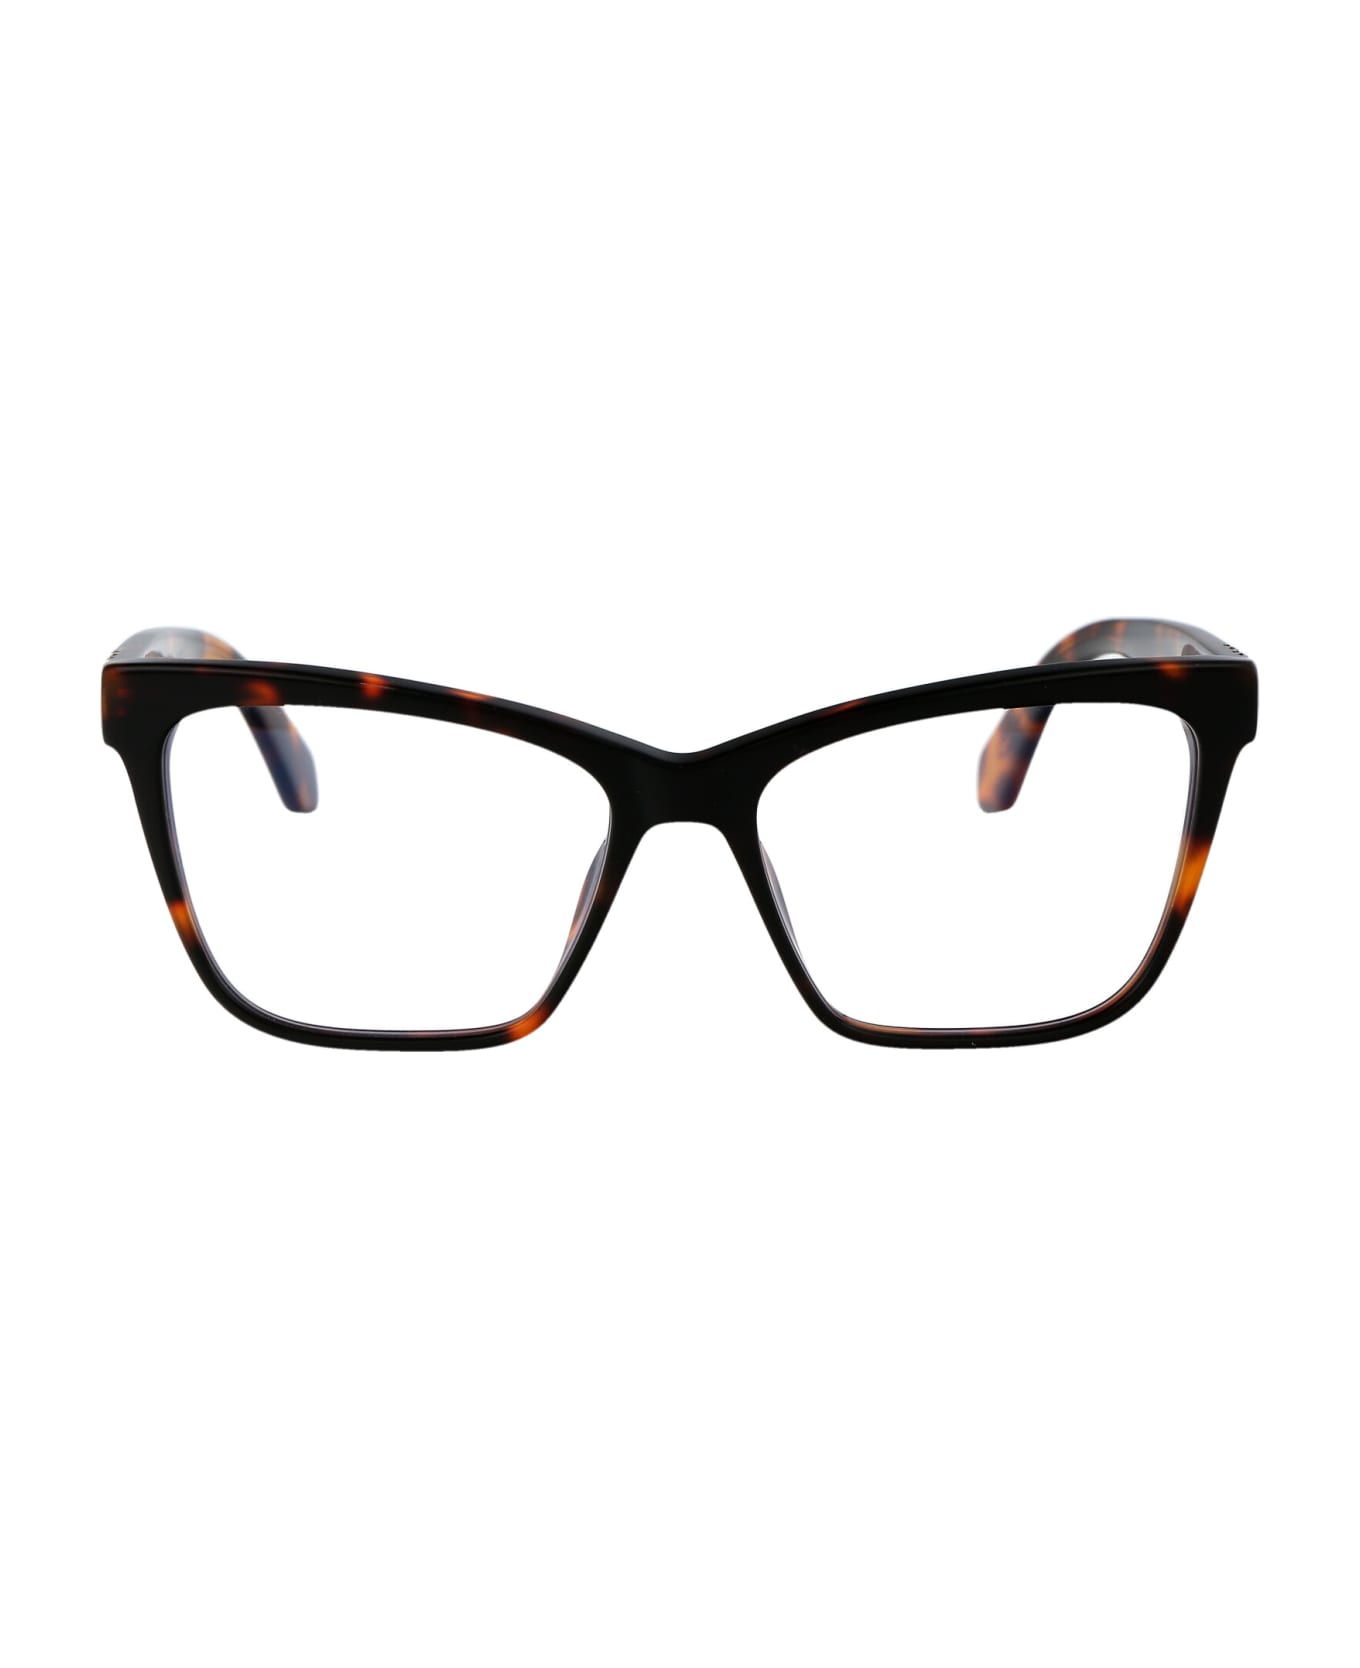 Off-White Optical Style 67 Glasses - 6000 HAVANA アイウェア